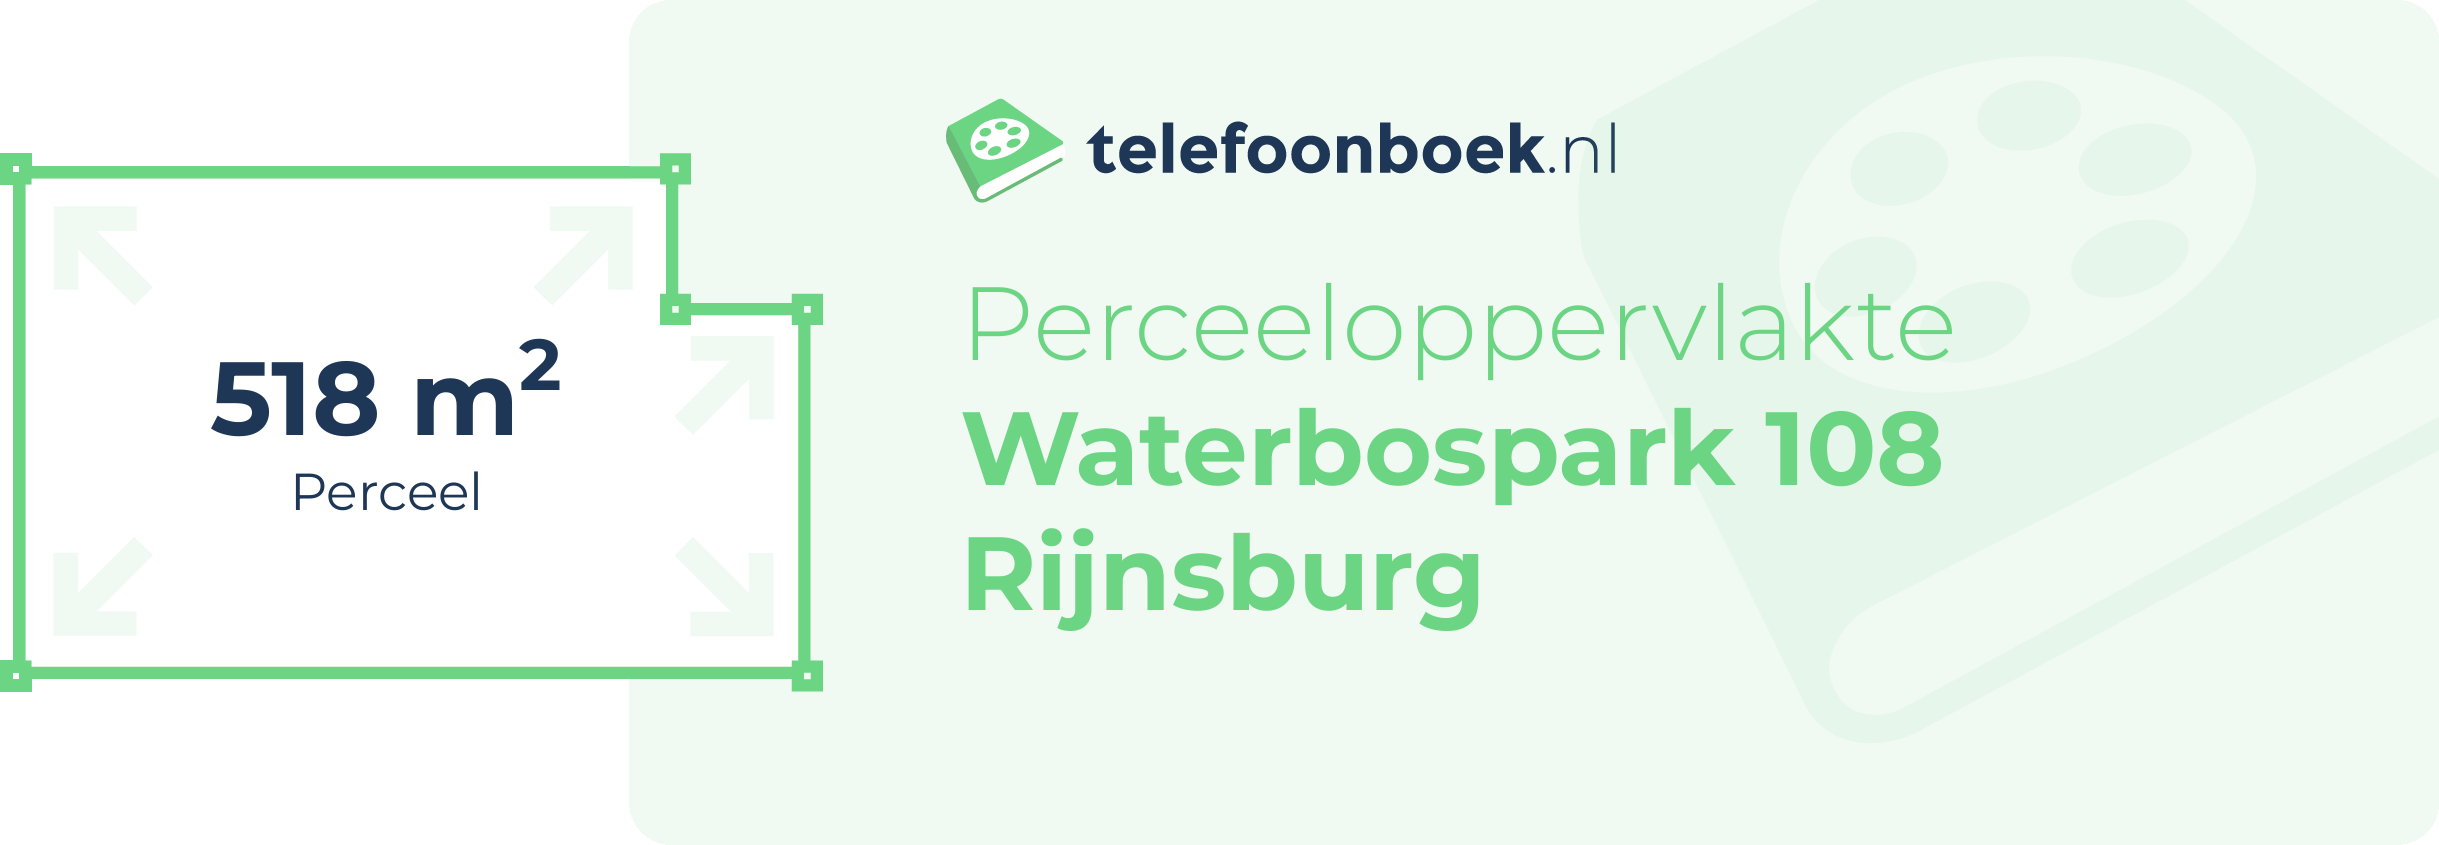 Perceeloppervlakte Waterbospark 108 Rijnsburg